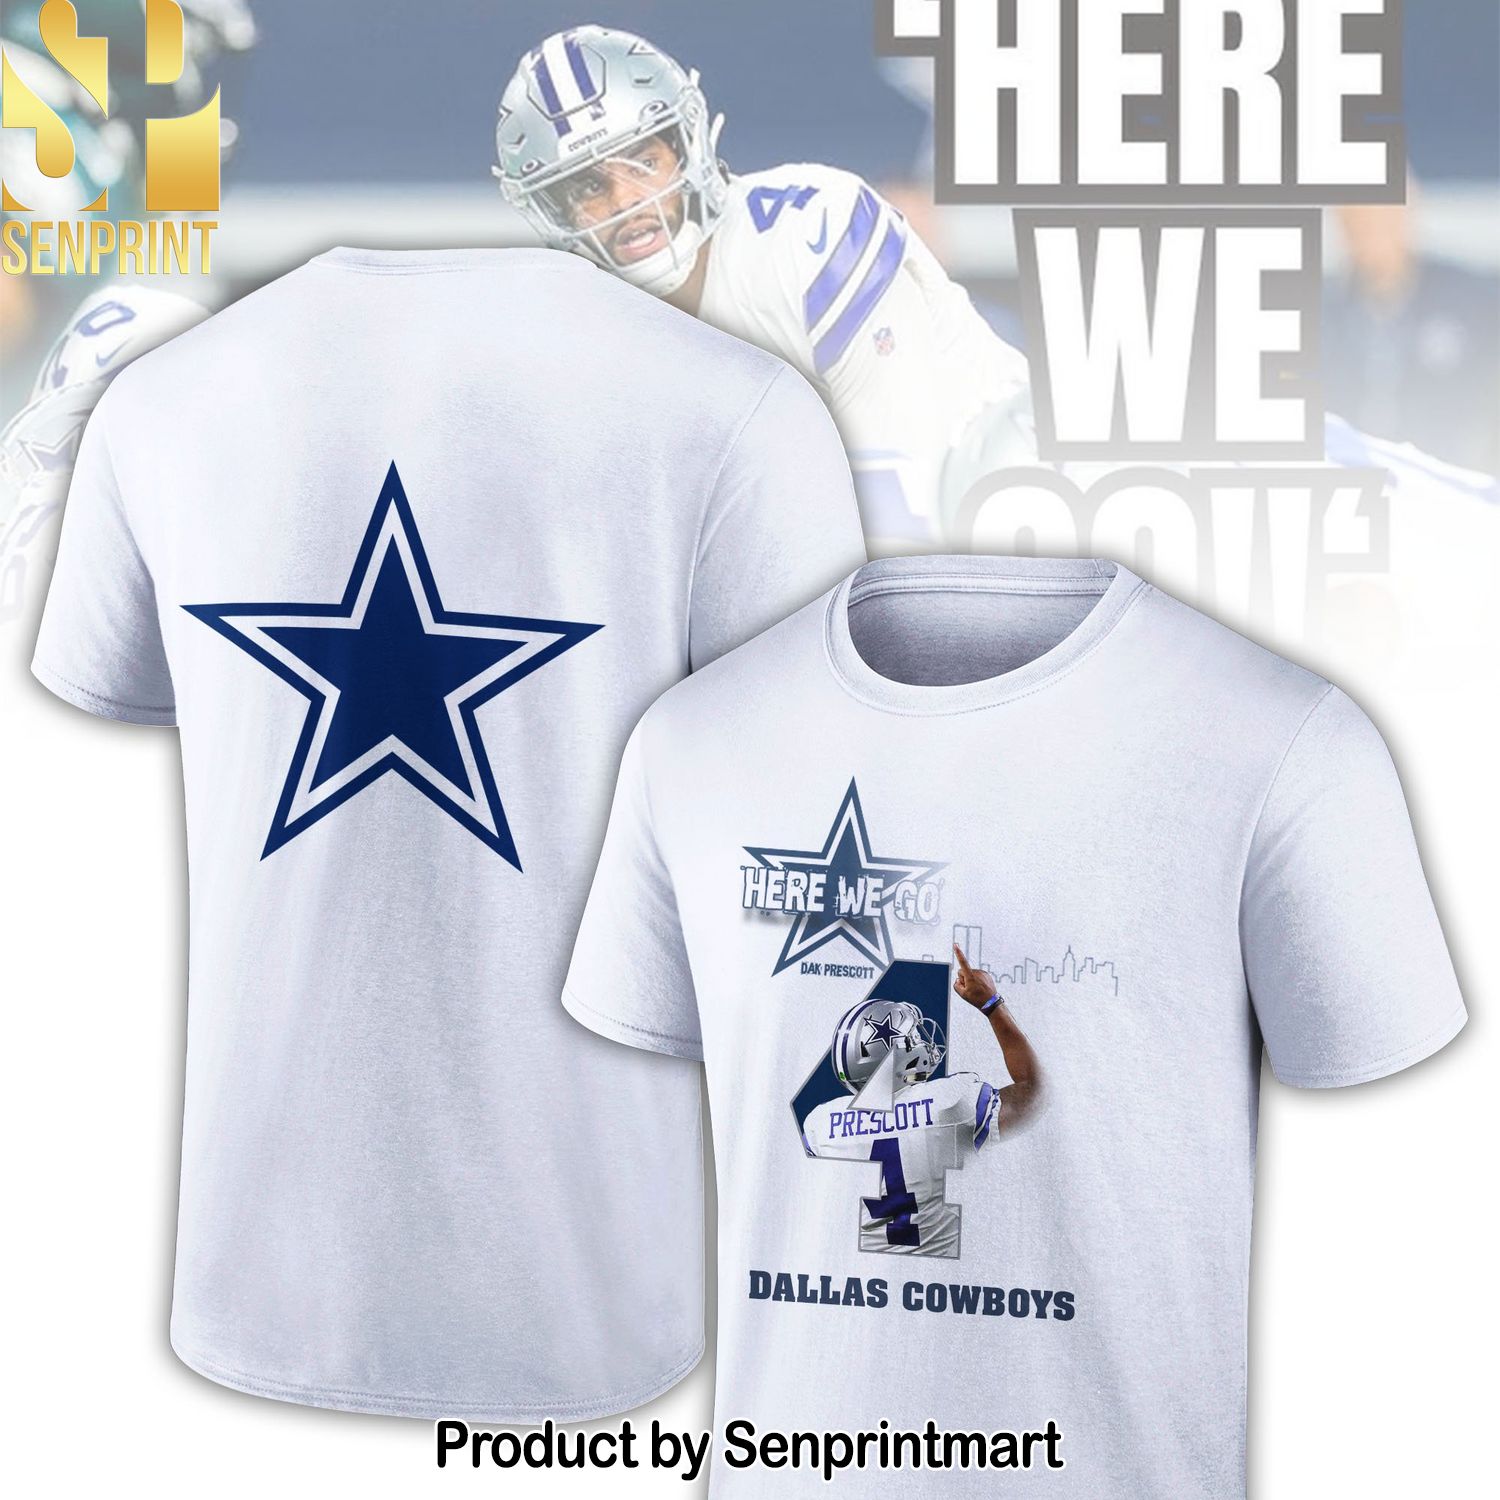 Football Team Dallas Cowboys Here We Go Shirt